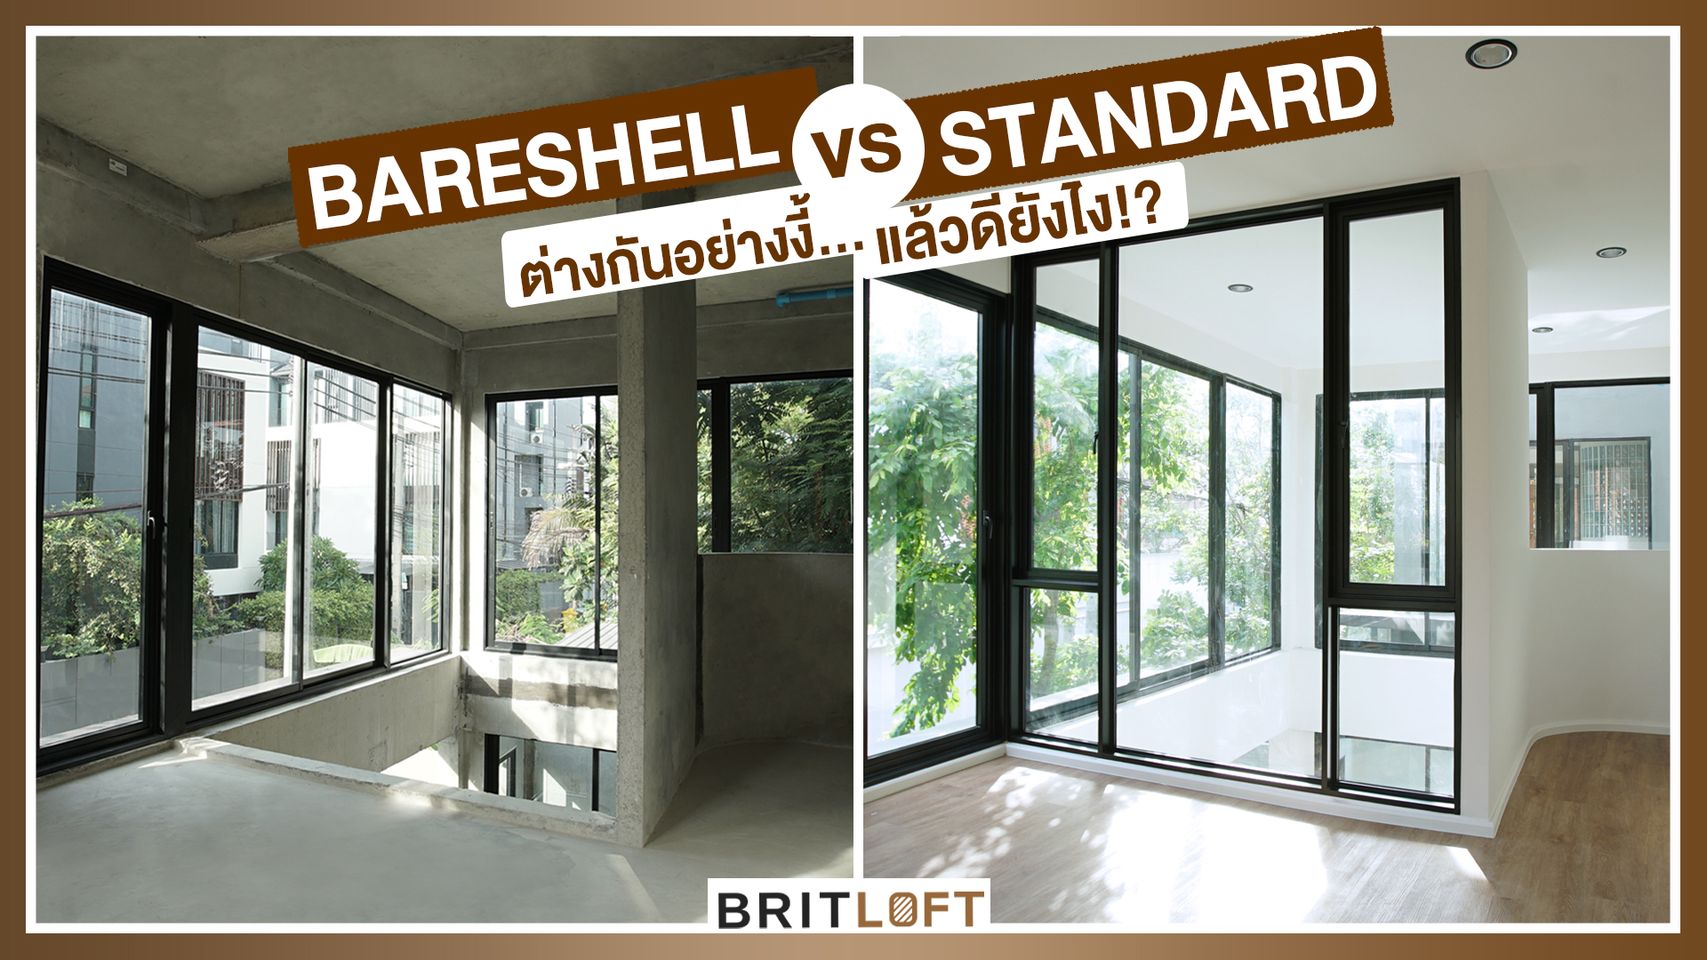 Britloft Bareshell EP.2 Bareshell vs Standard ต่างกันอย่างงี้...แล้วดียังไง